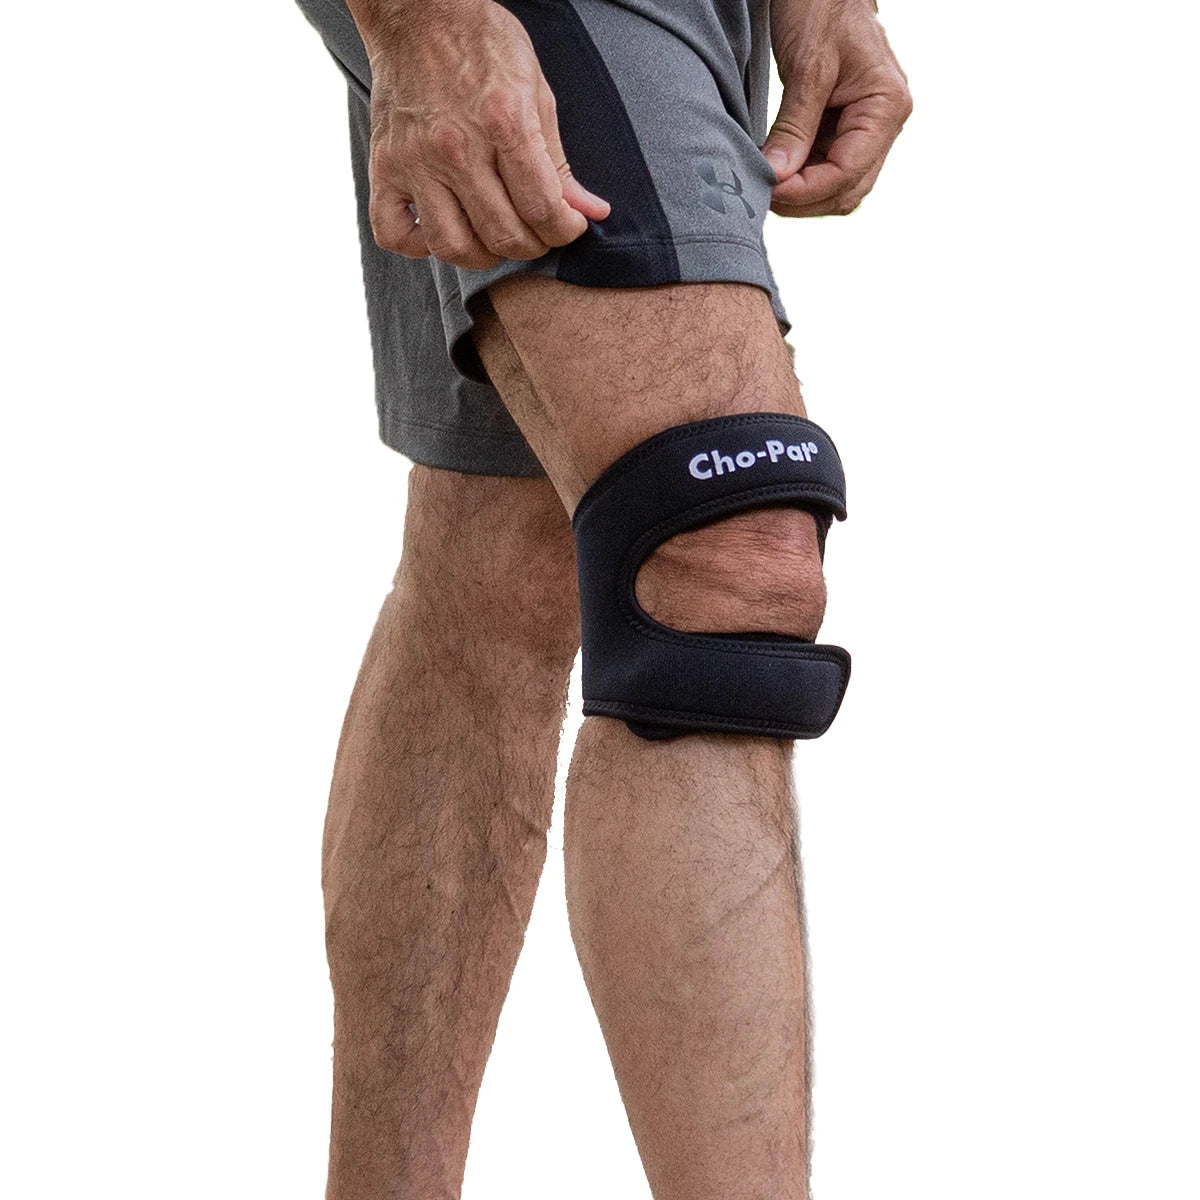 Cho-Pat Dual Action Knee Strap Brace, S, M, L, XL, 2XL